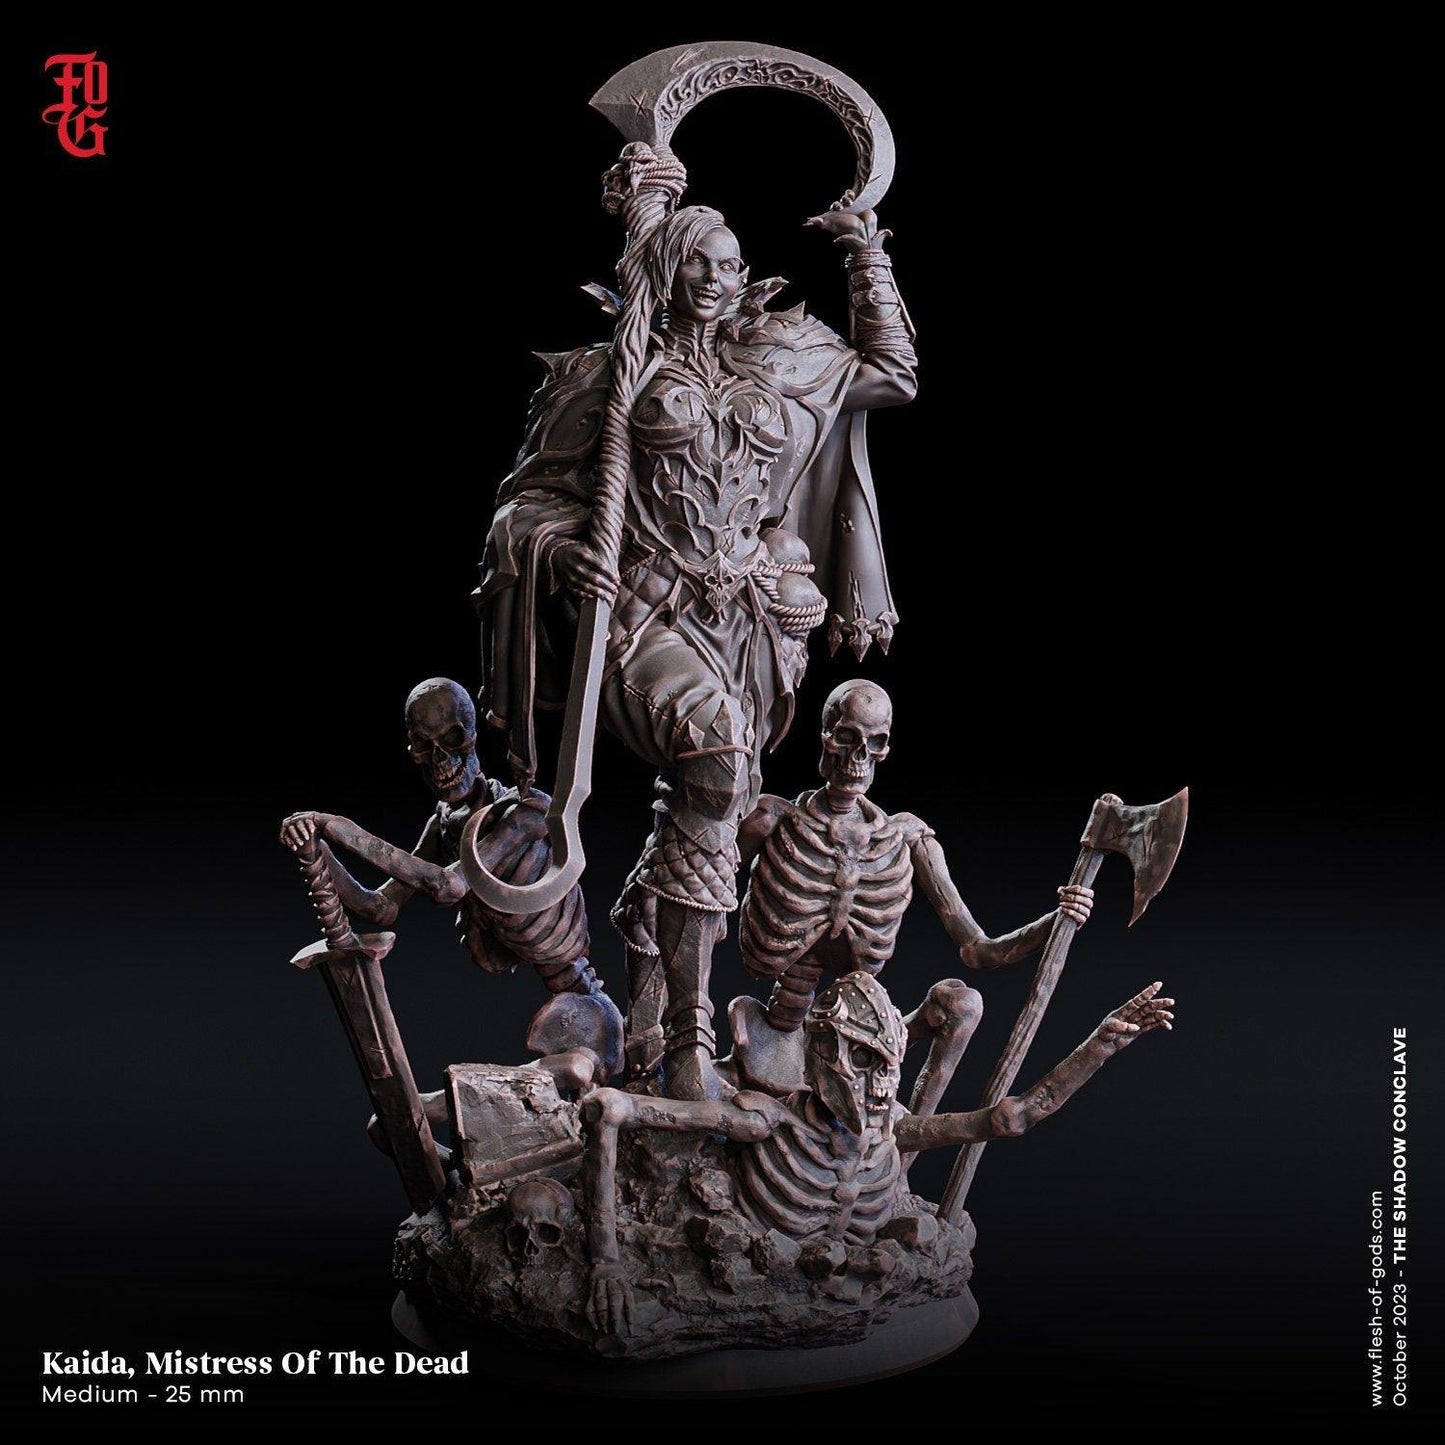 Kaida, Mistress of the Dead | Female Necromancer Bust Statue for Dark Collectors - Plague Miniatures shop for DnD Miniatures